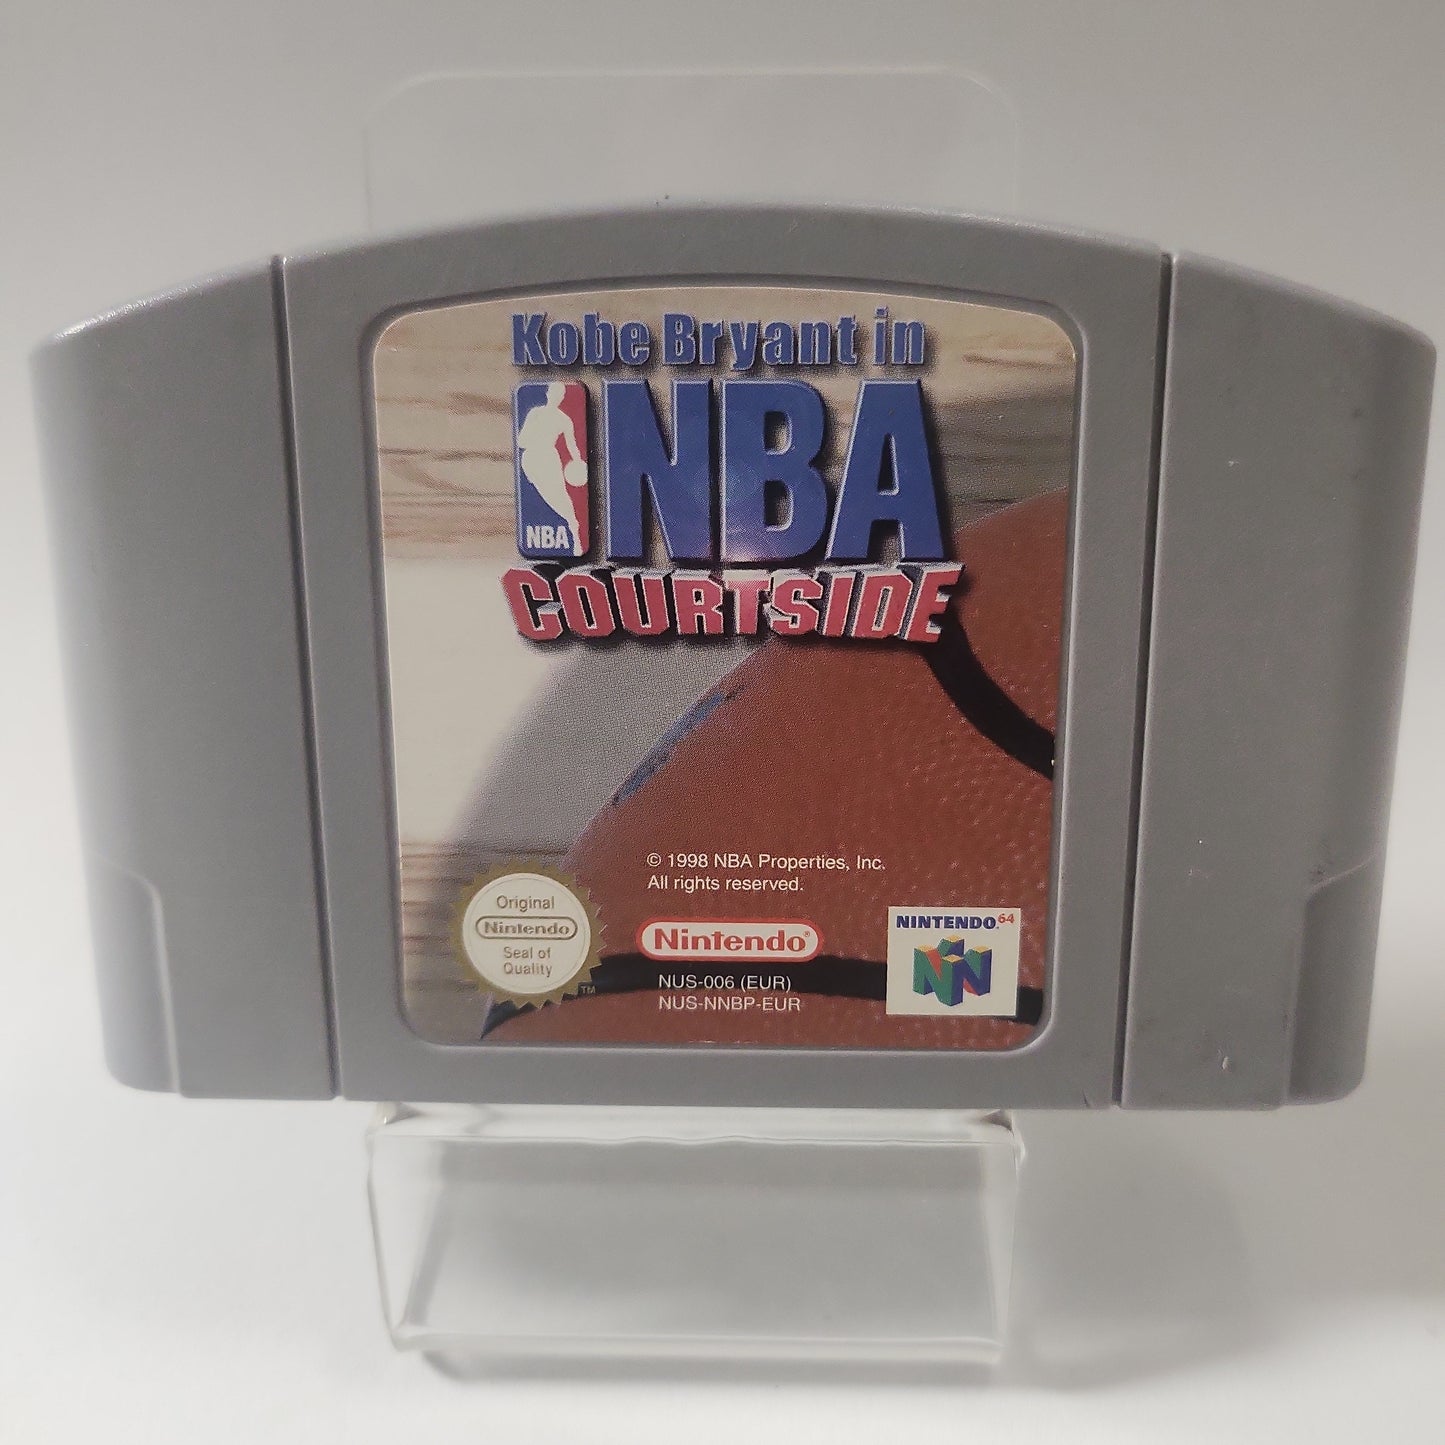 Kobe Bryant im NBA Courtside Nintendo 64